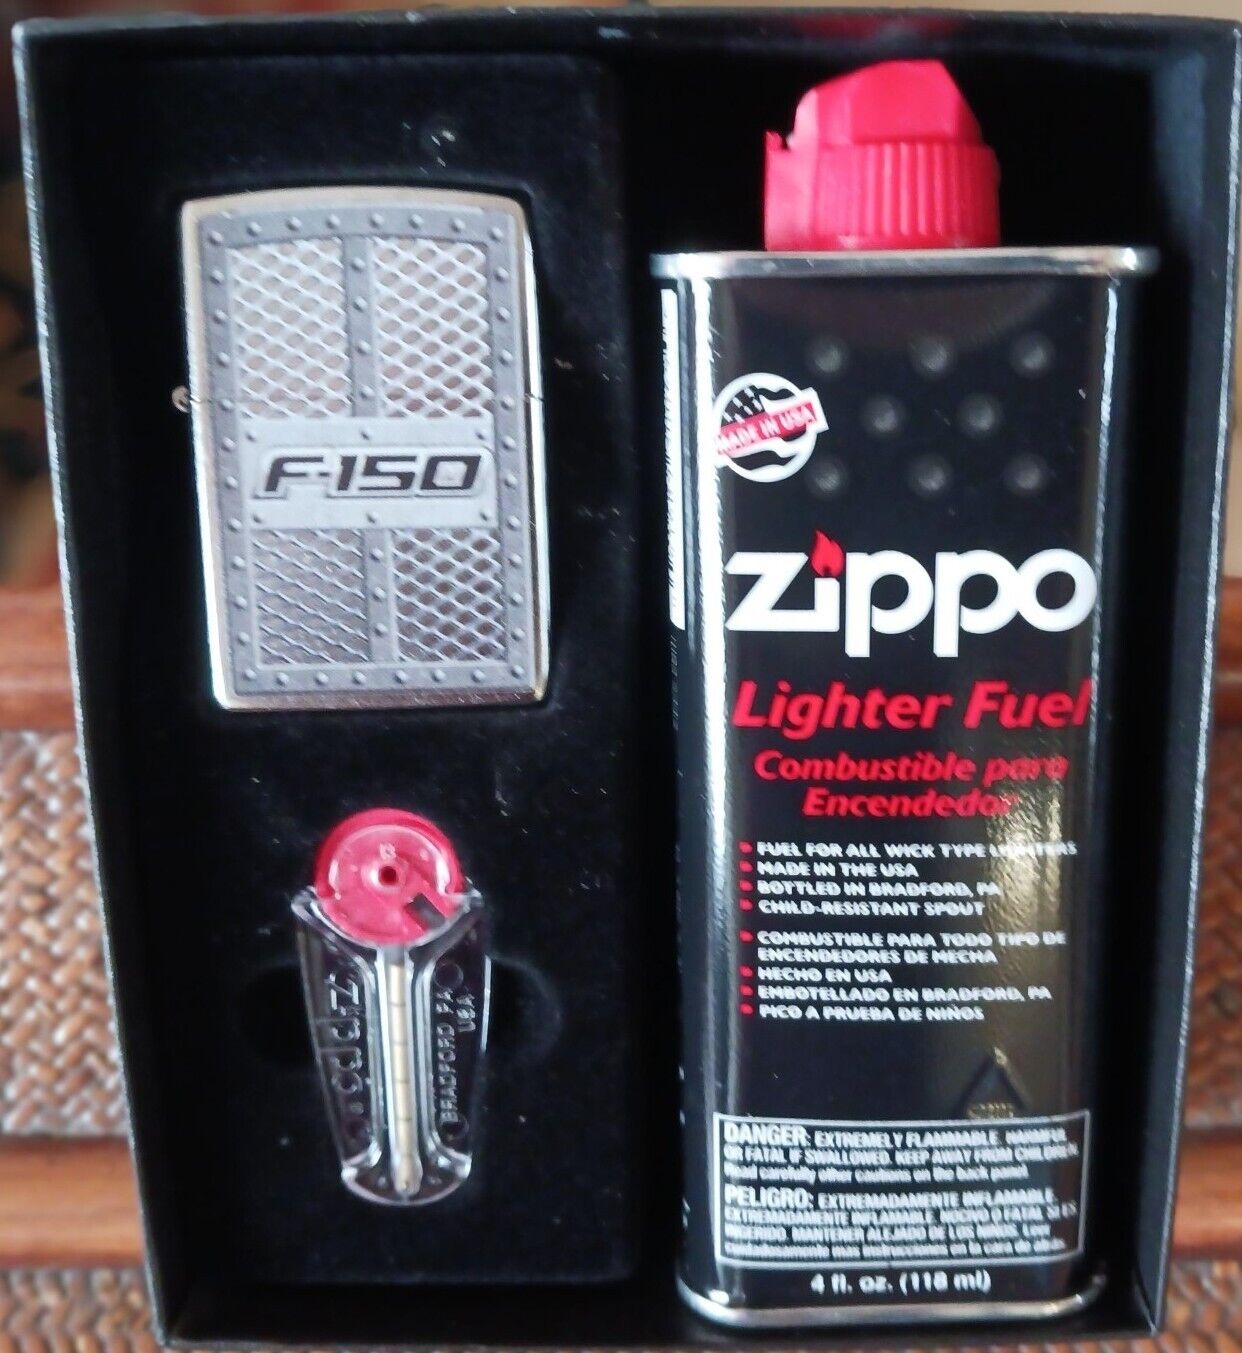 Gorgeous Ford F-150 Truck Diamond Plate Design Zippo   Lighter Gift Set